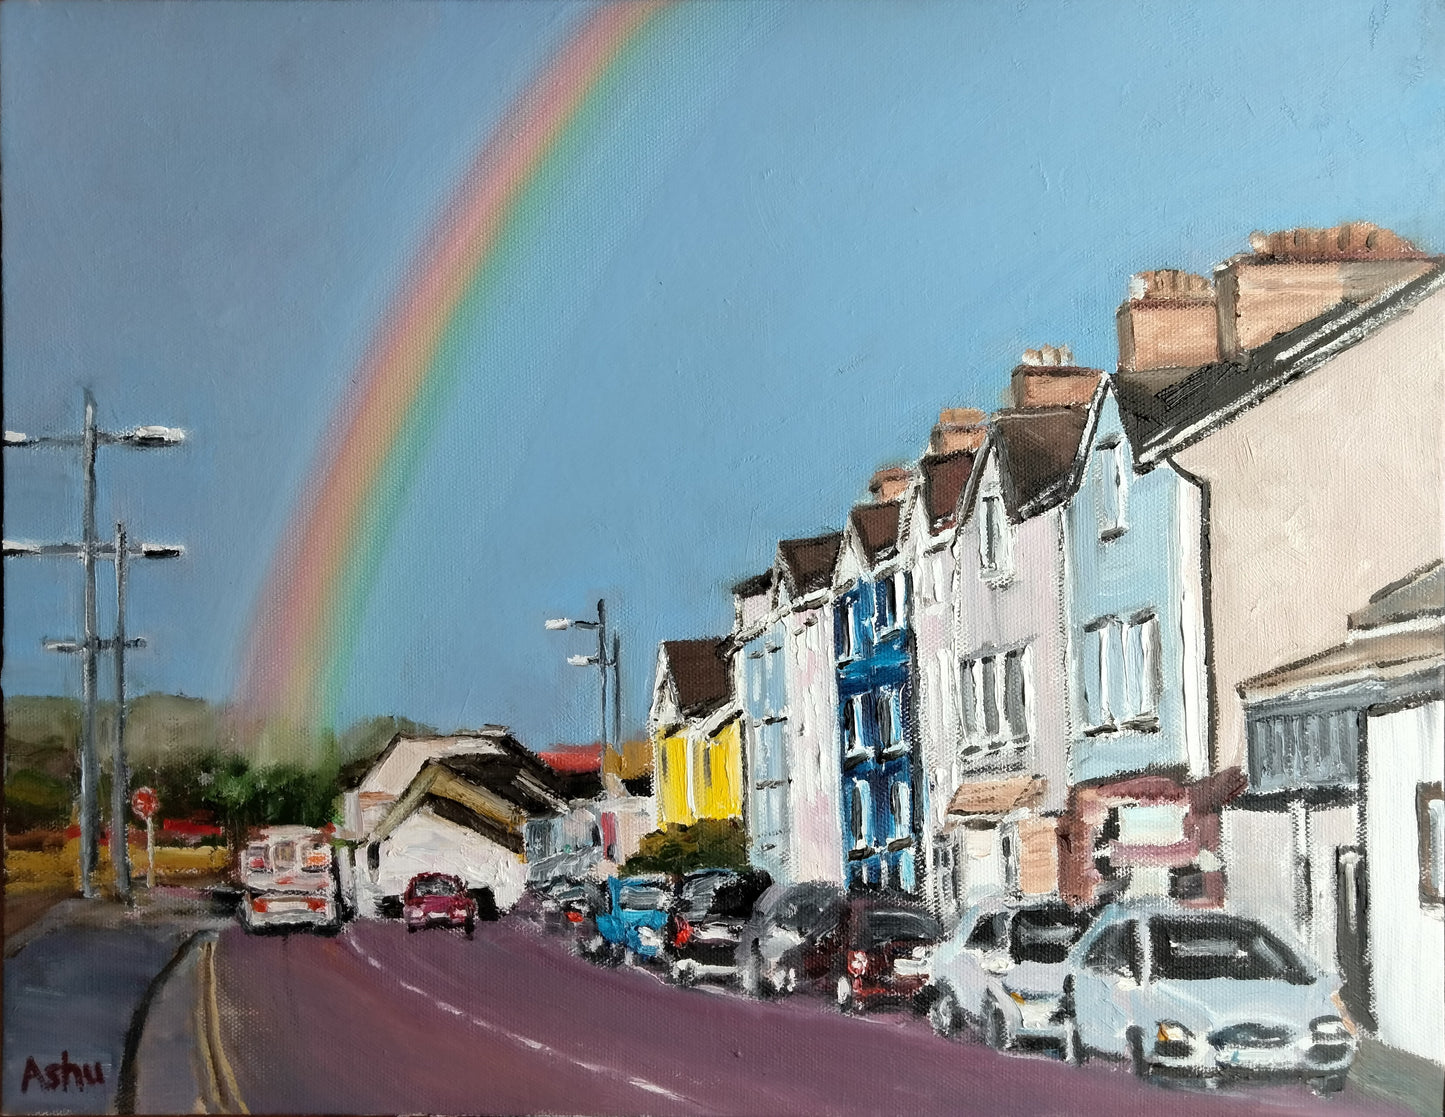 "Rainbow over Cork City, Ireland"